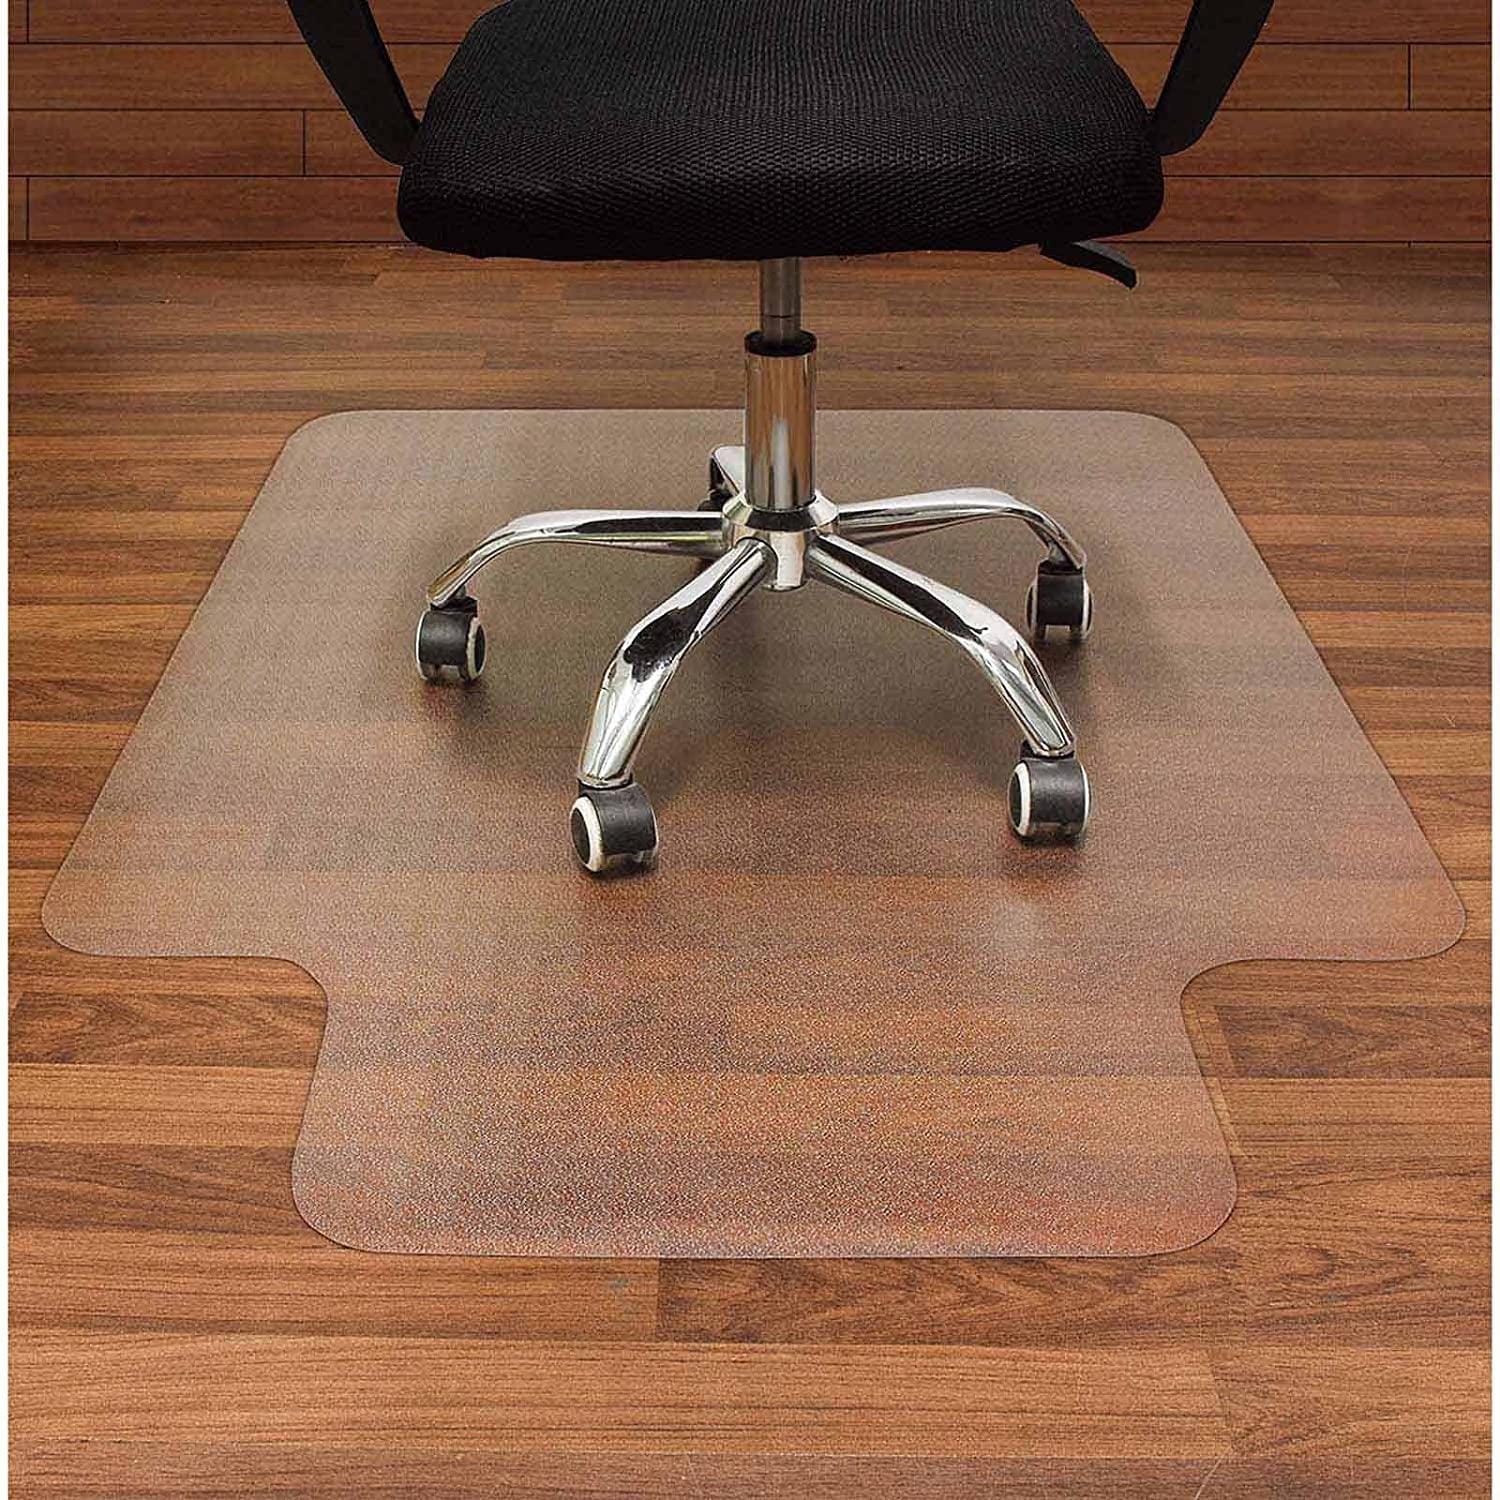 PVC Mat Home Office Protector Carpet Hard Floor Desk Chair Studded Back 